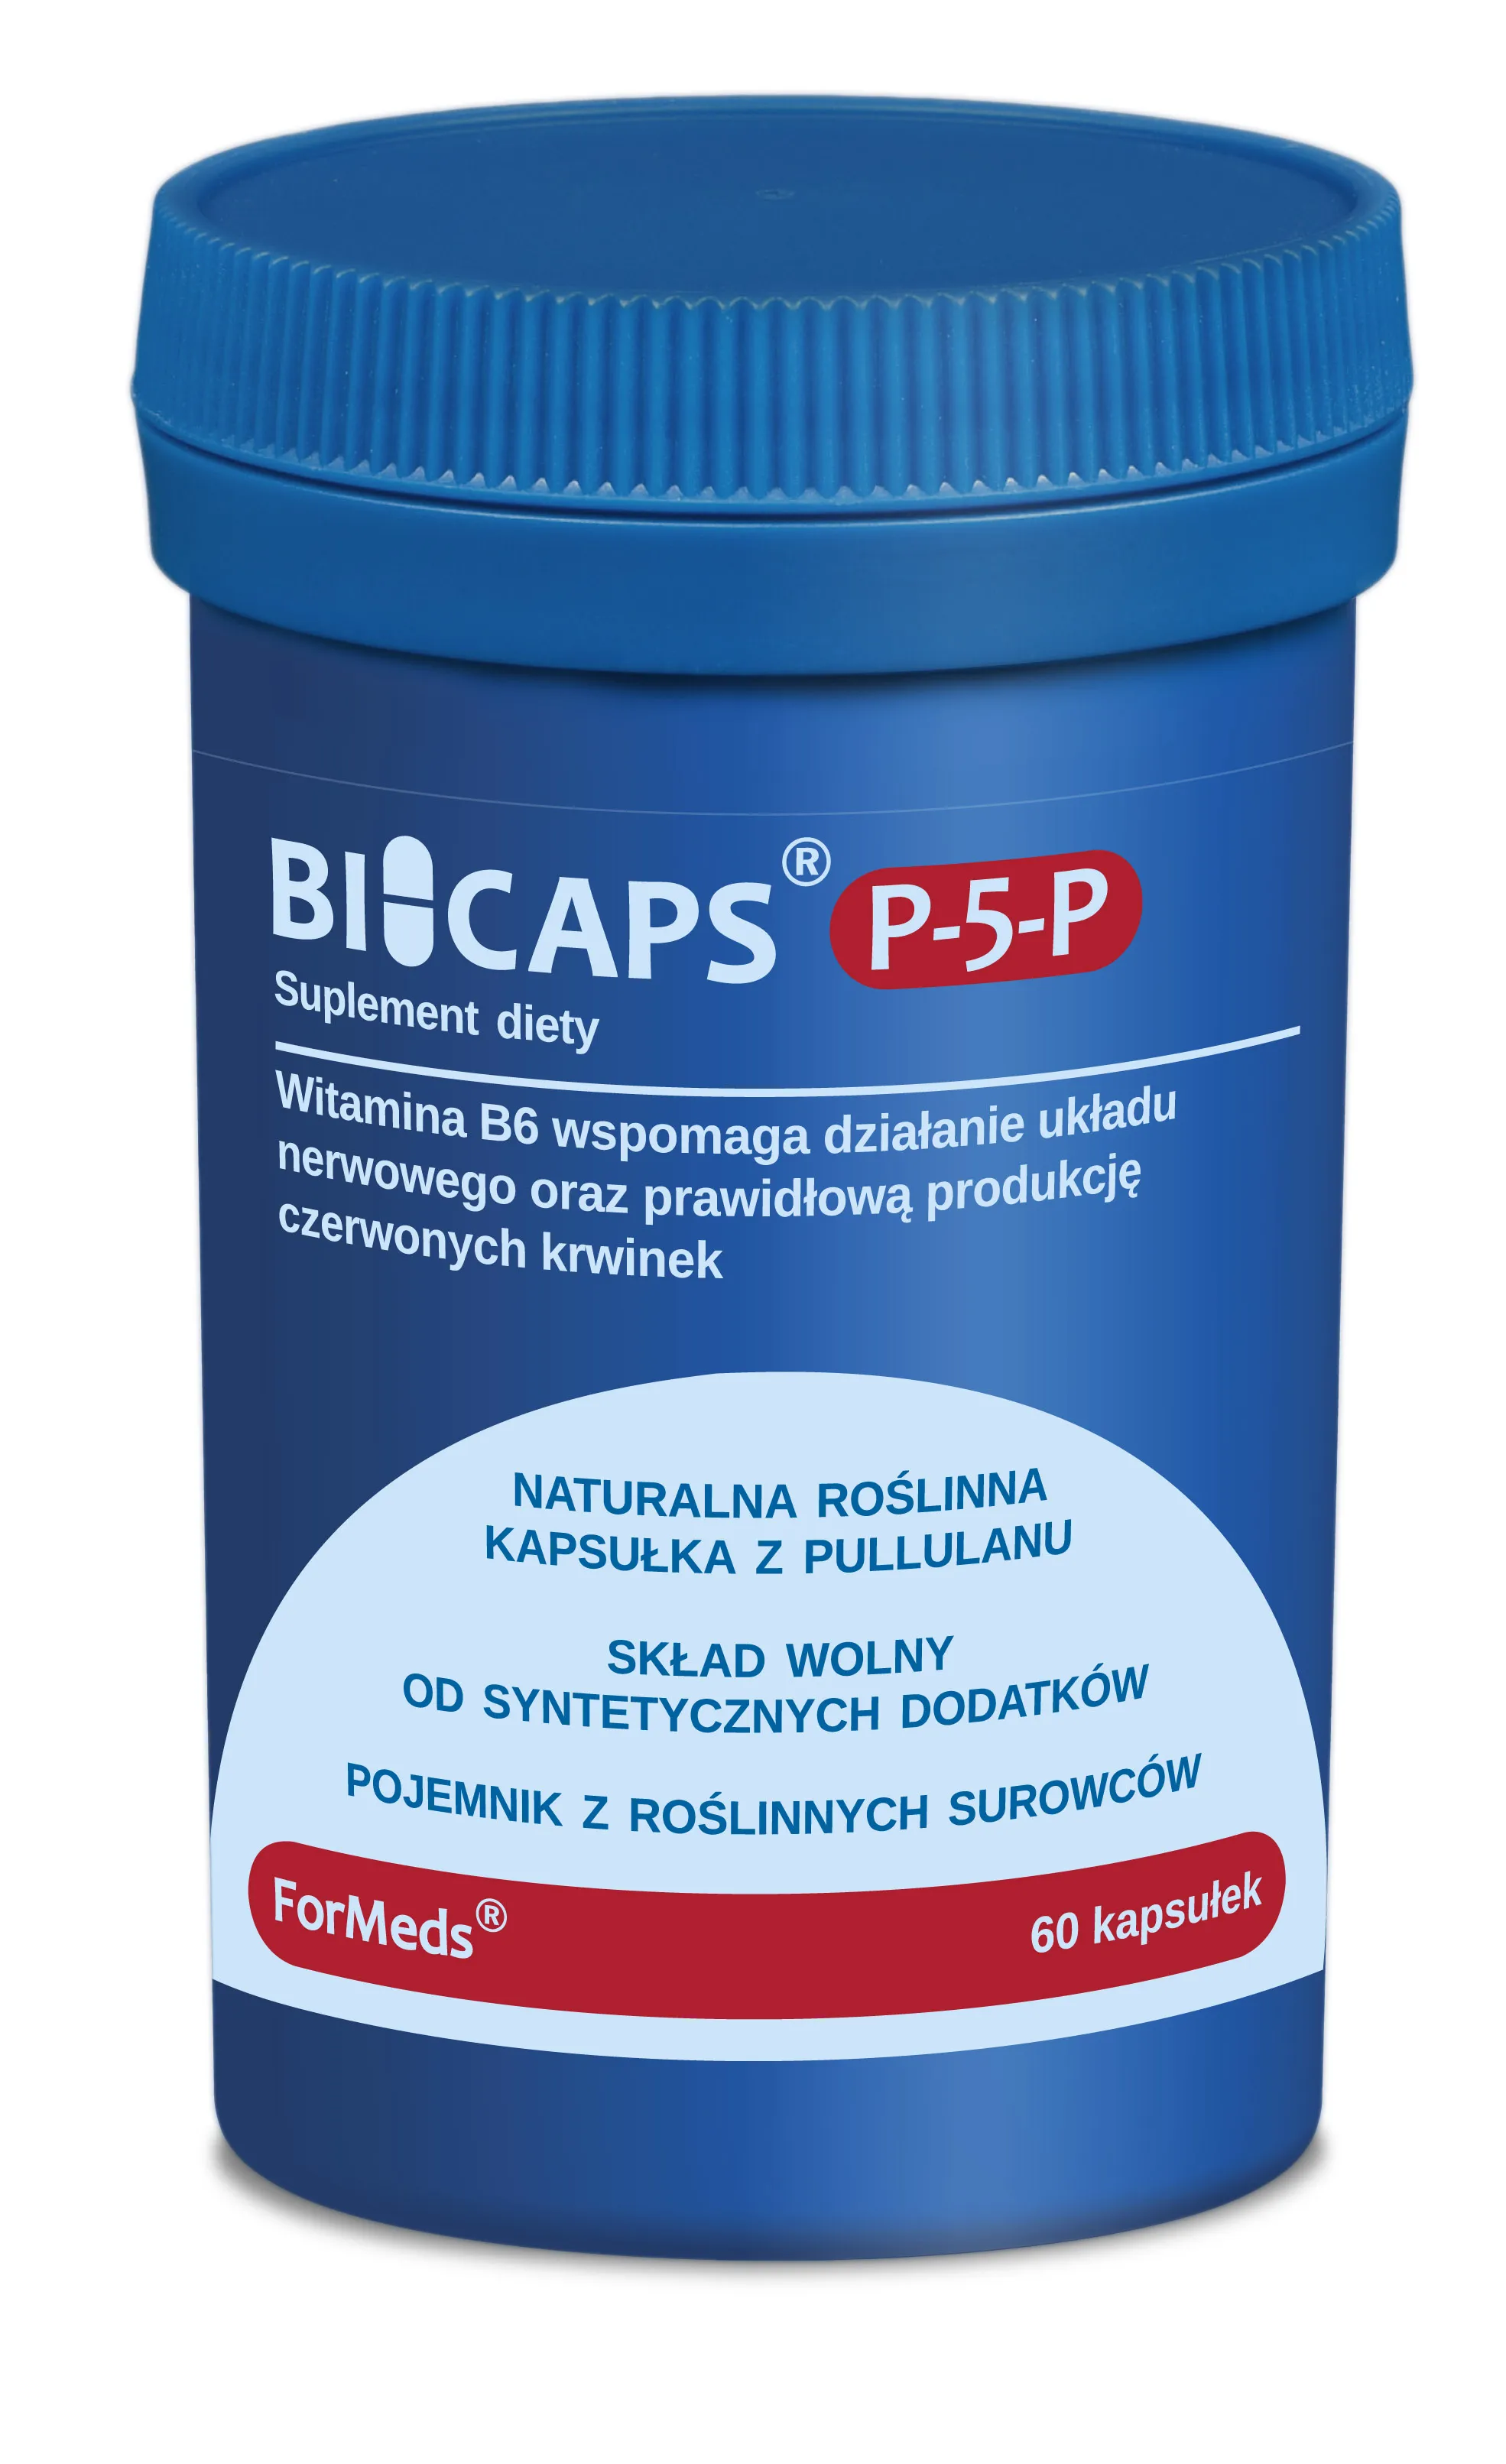 ForMeds Bicaps P-5-P, suplement diety, 60 kapsułek